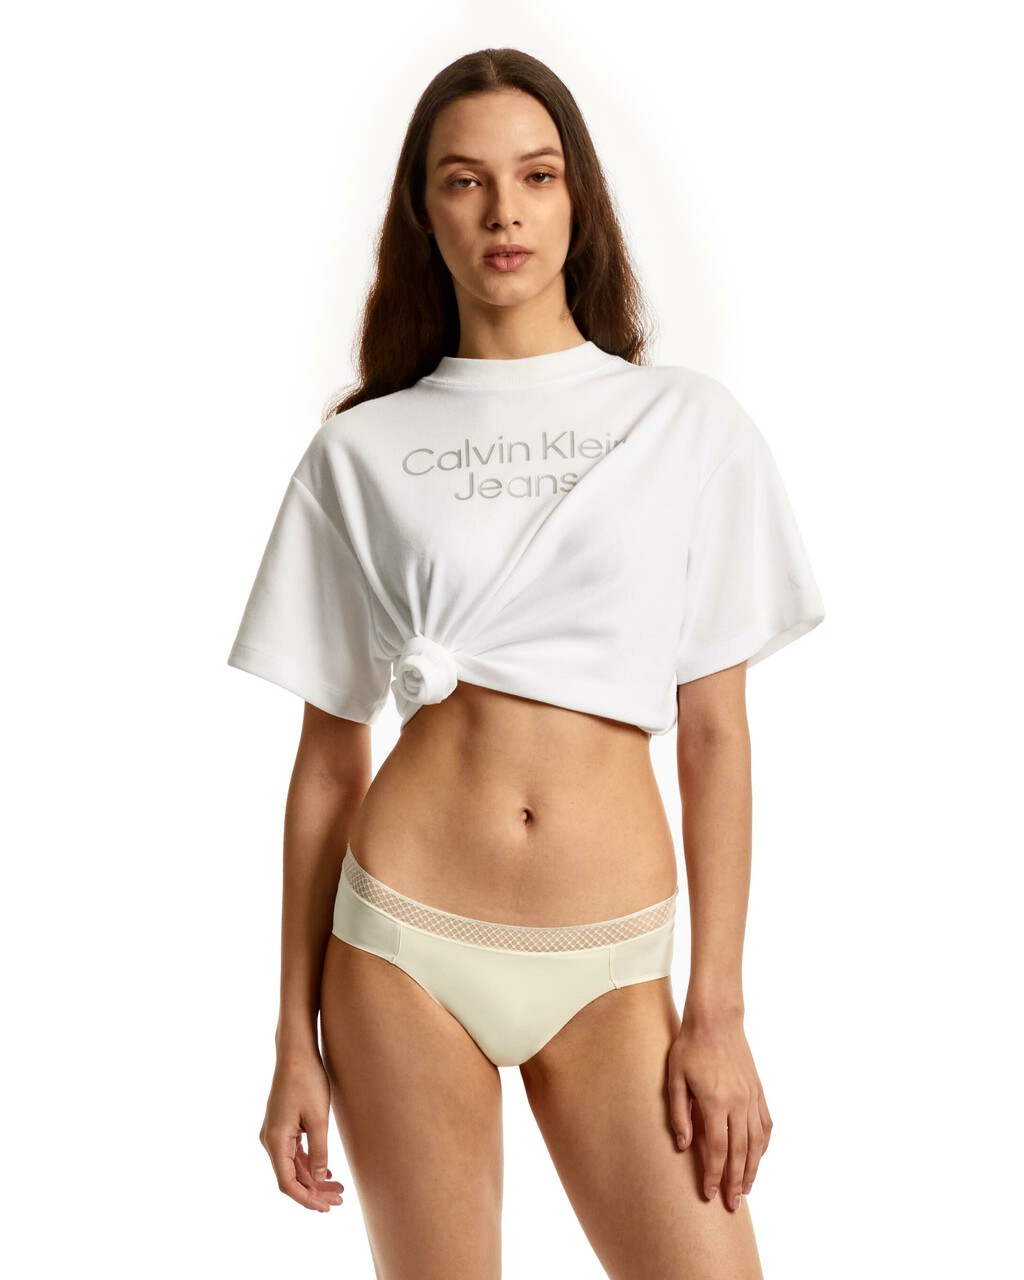 Seductive Comfort Light Bikini, Ivory, hi-res